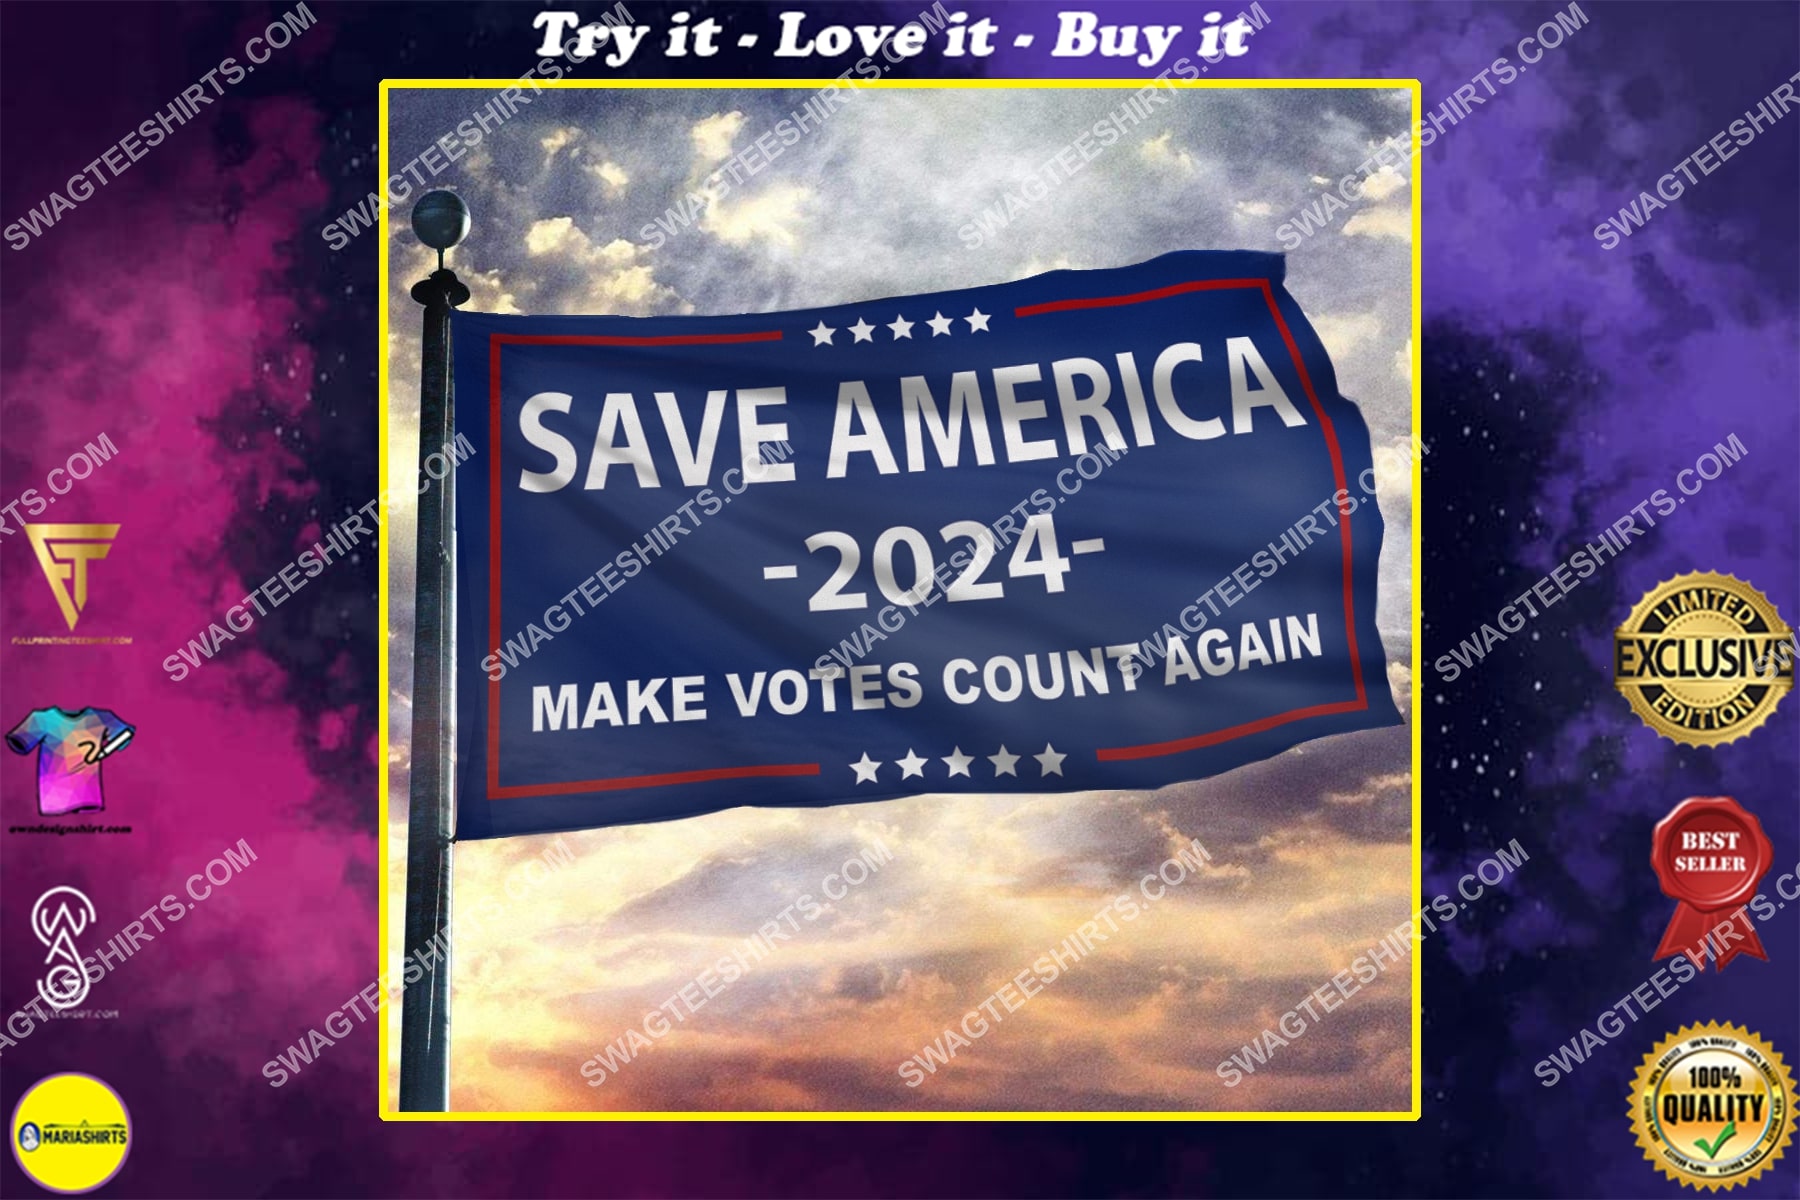 save america 2024 make votes count again politics flag